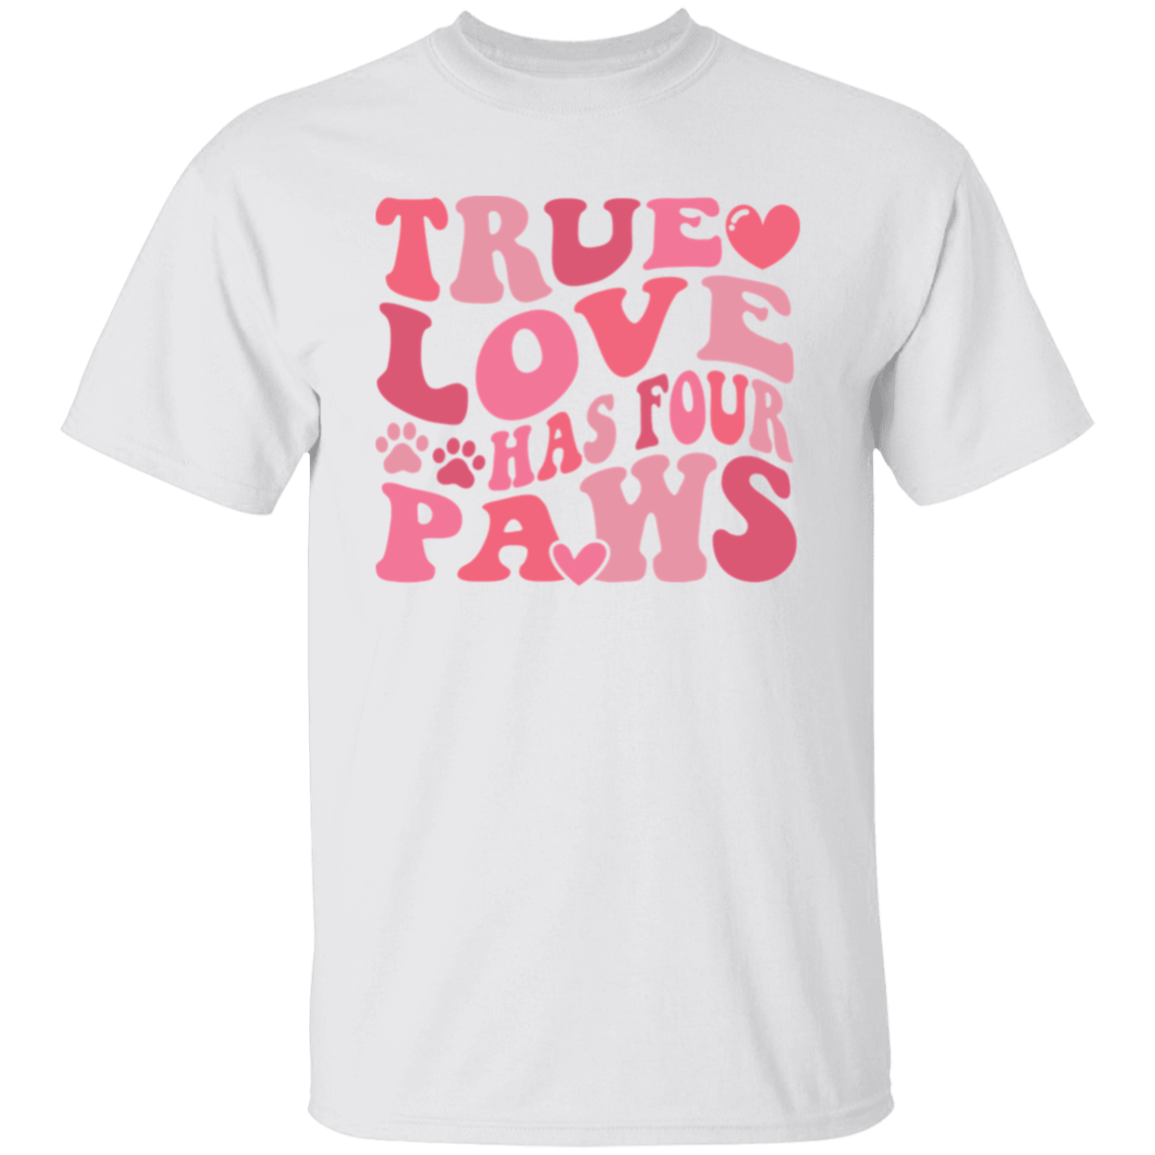 True Love Has Four Paws T-Shirt